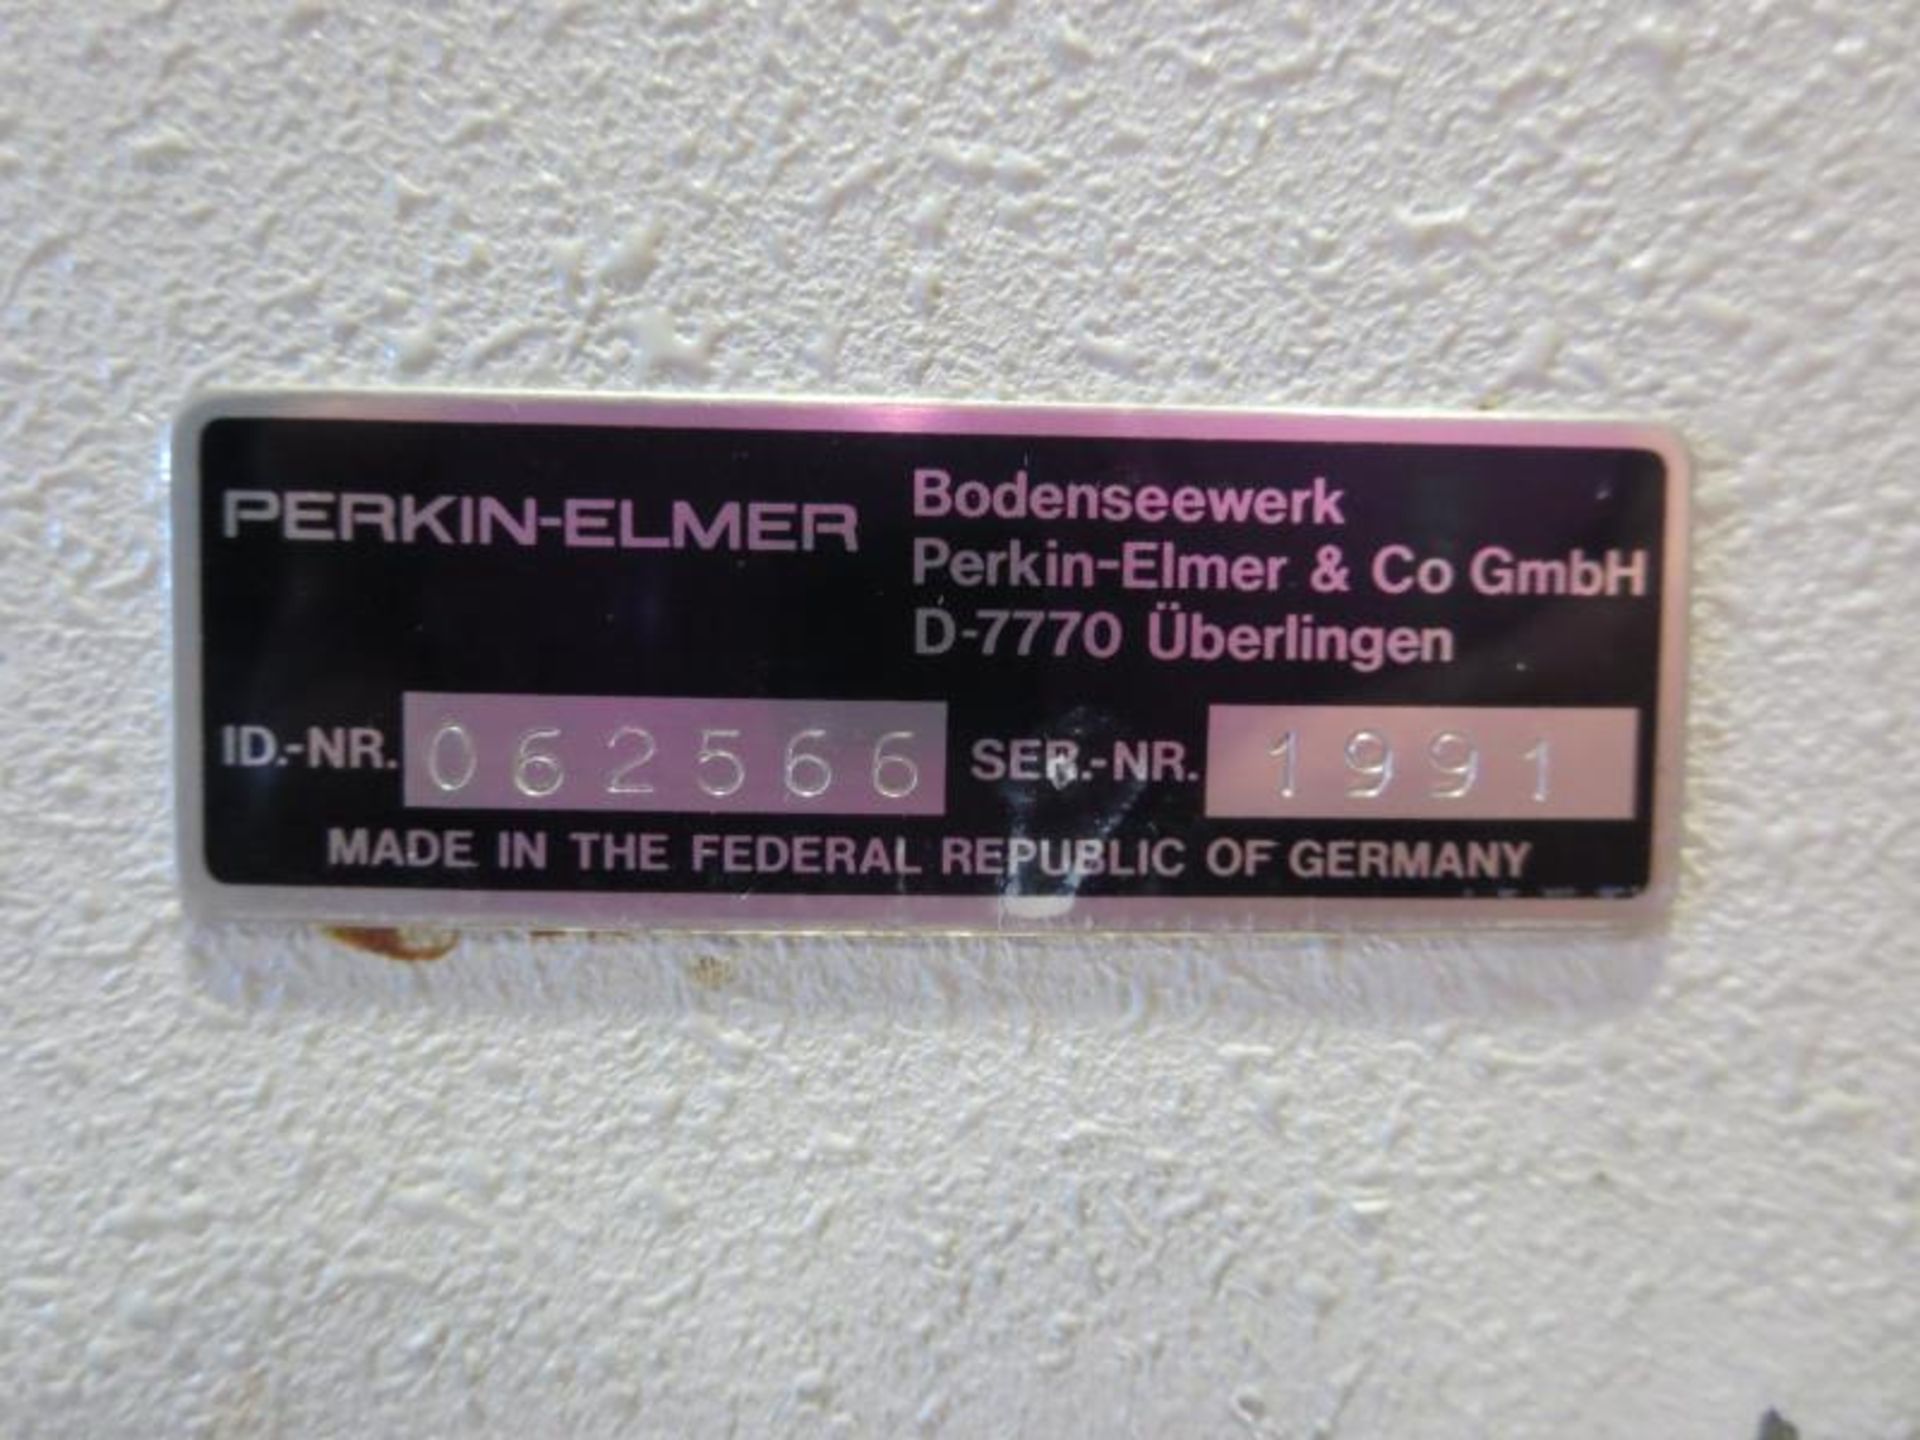 PerkinElmer 062566 Hydraulic Press - Image 2 of 2